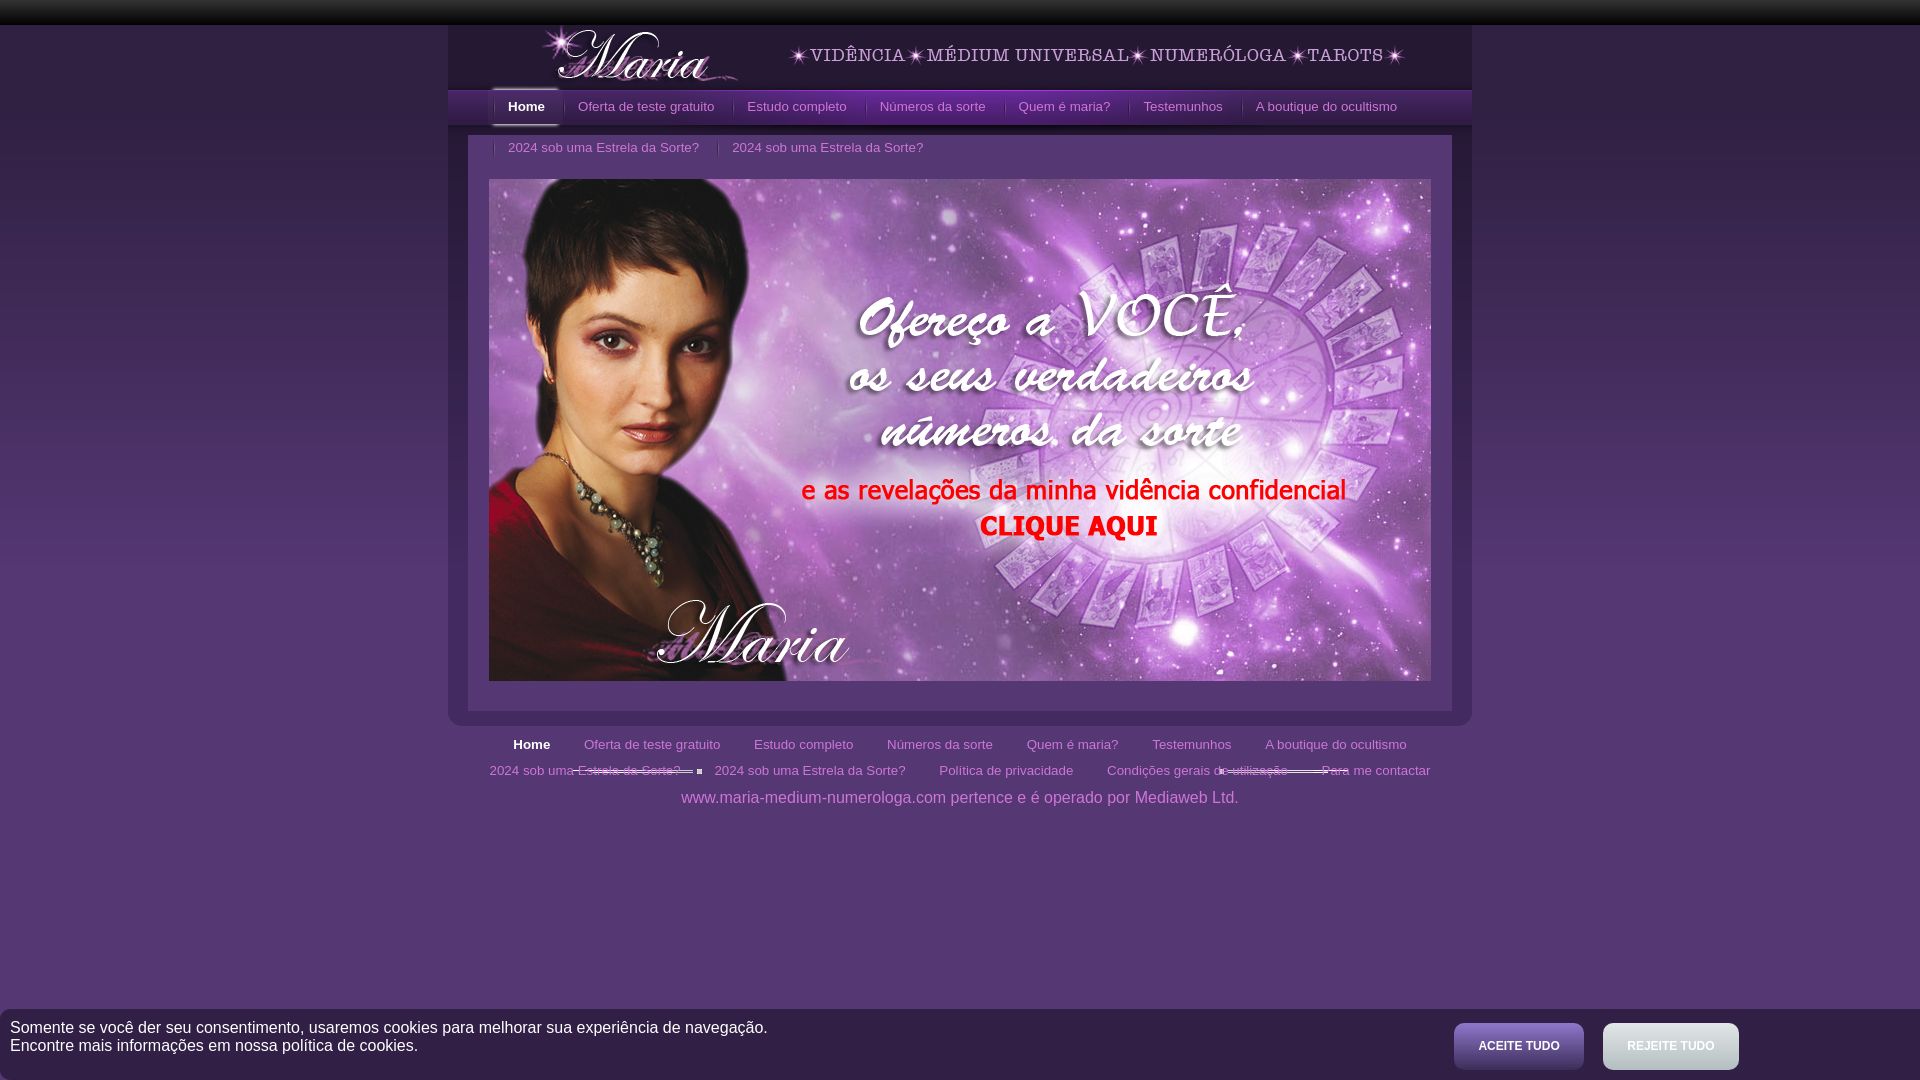 вебсайт maria-medium-numerologa.com Є   ONLINE